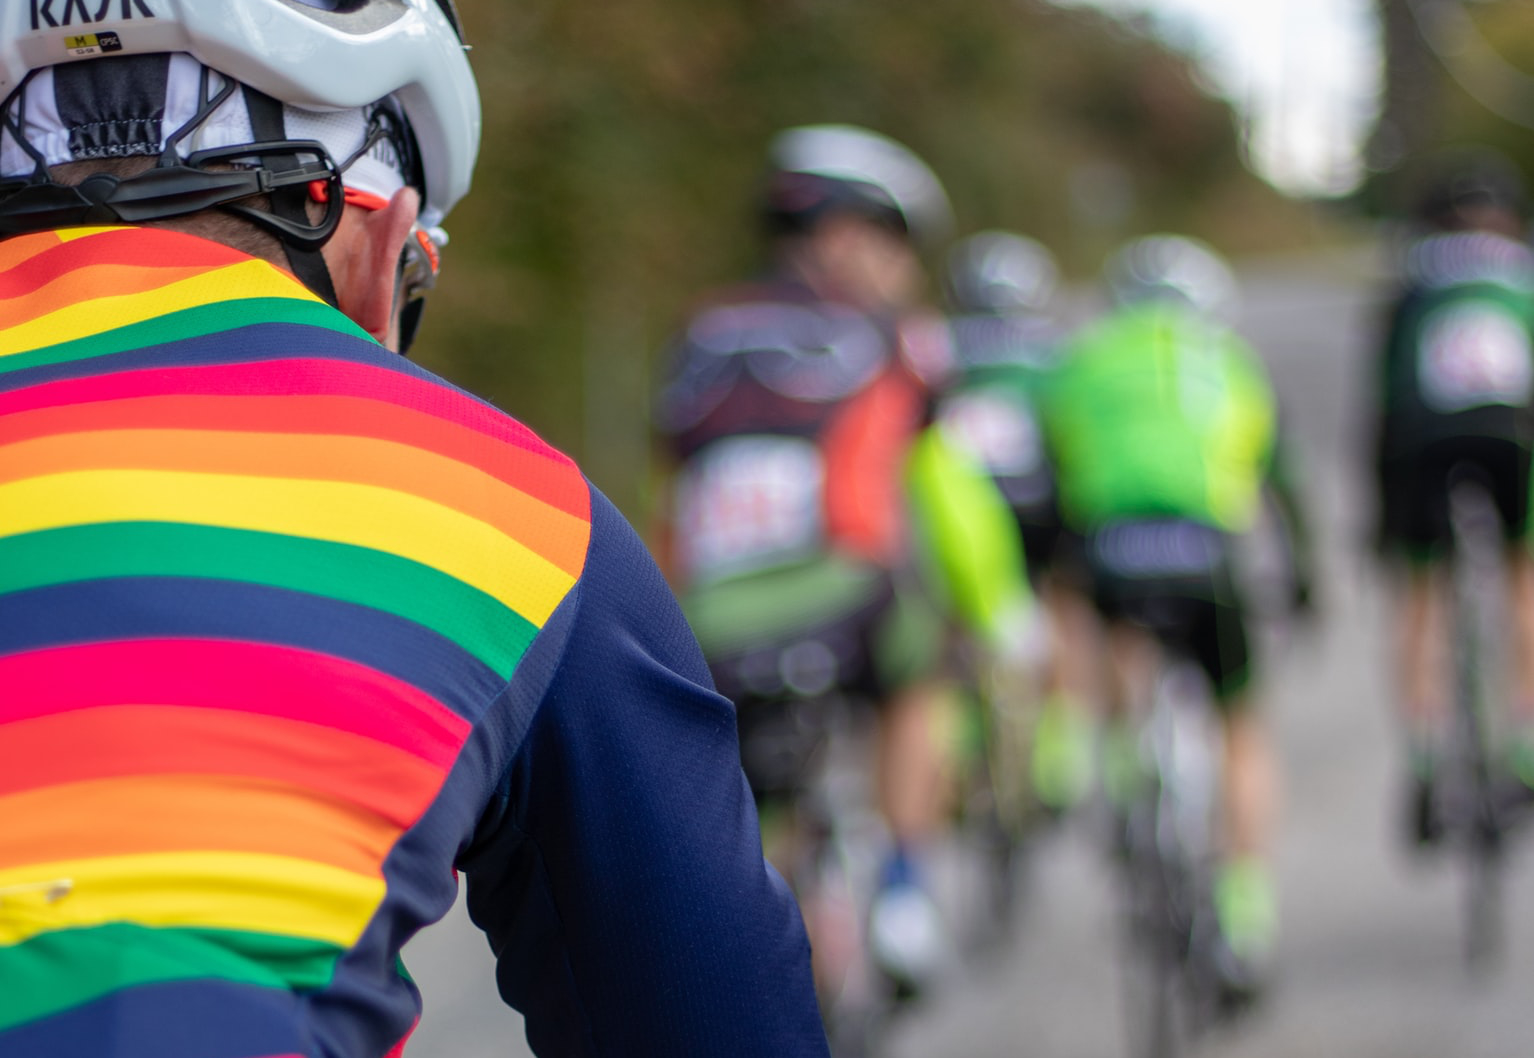 Cyclist with rainbow vest on by Greg Rosenke